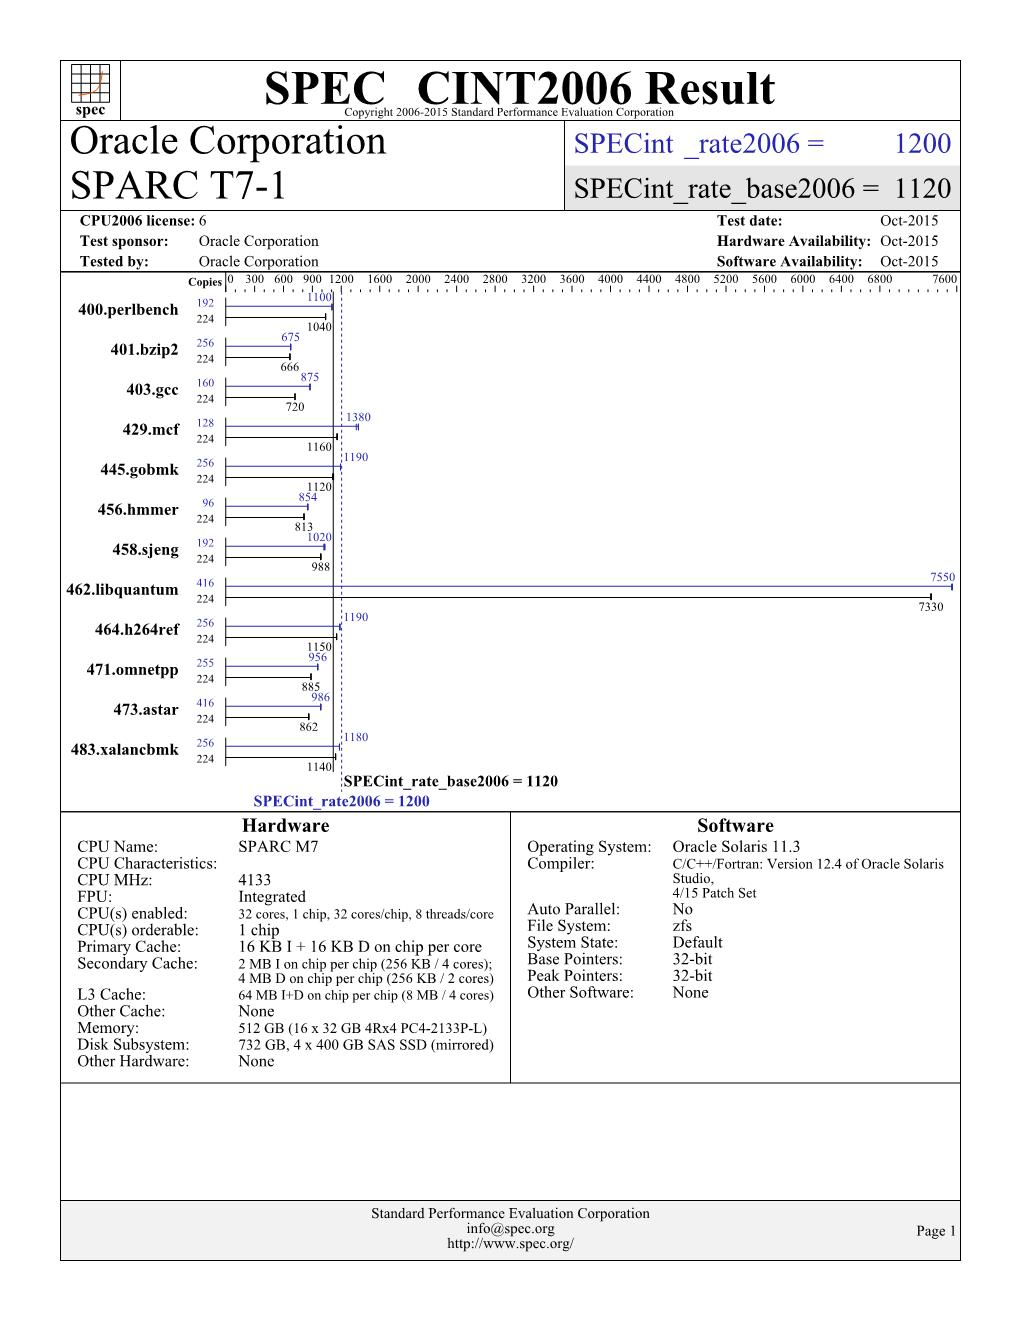 Oracle Corporation: SPARC T7-1